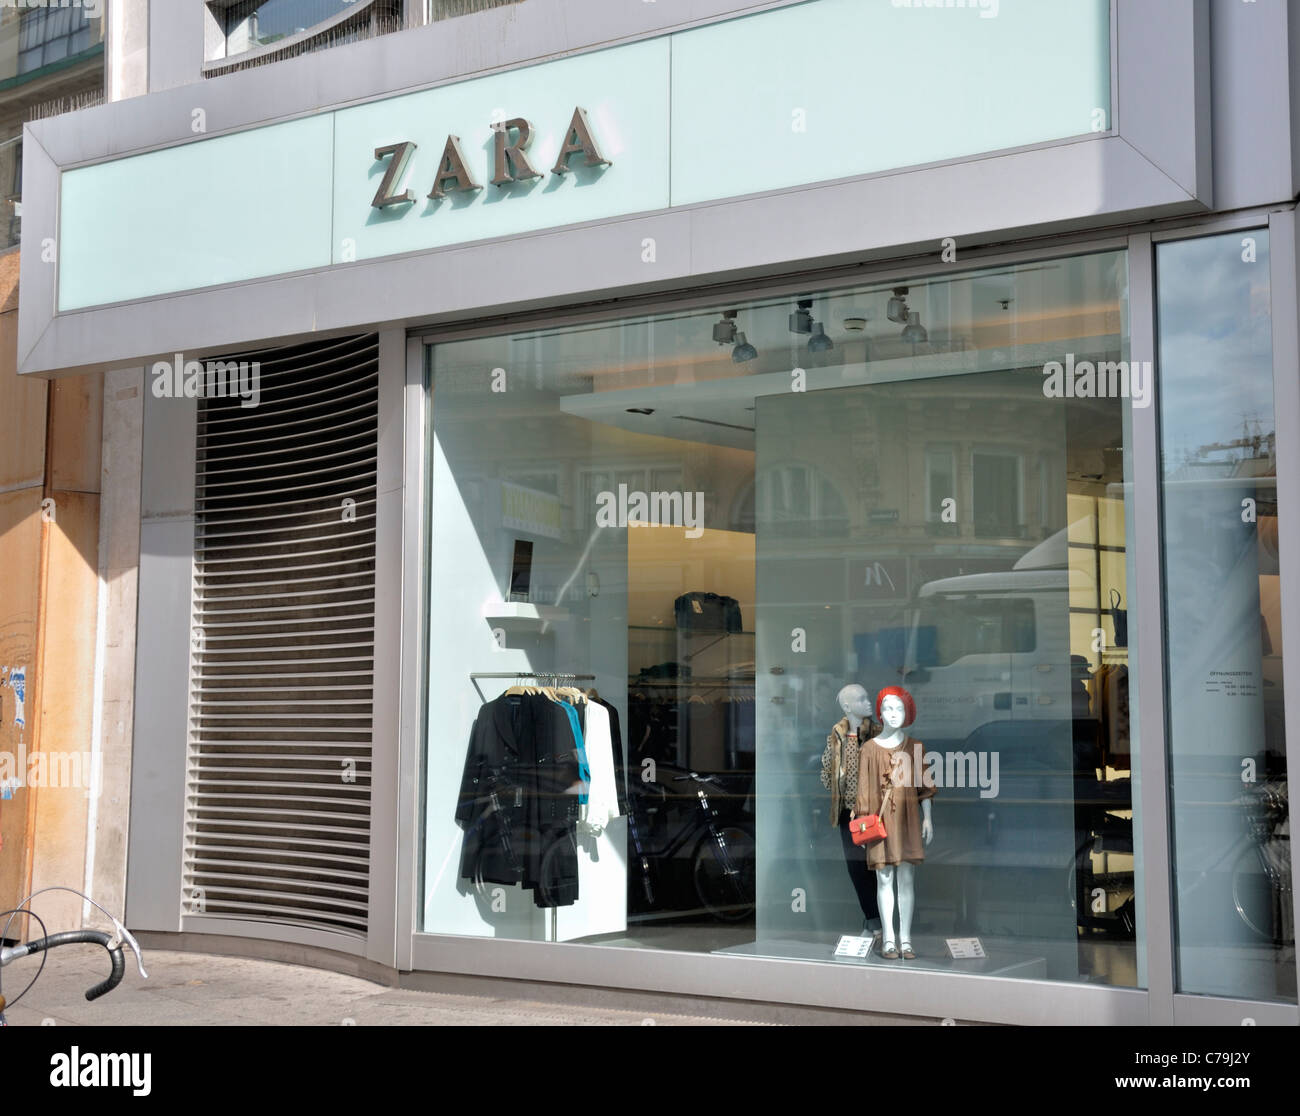 Zara Shop in Stephansplatz, Wien, Österreich, Europa Stockfotografie - Alamy